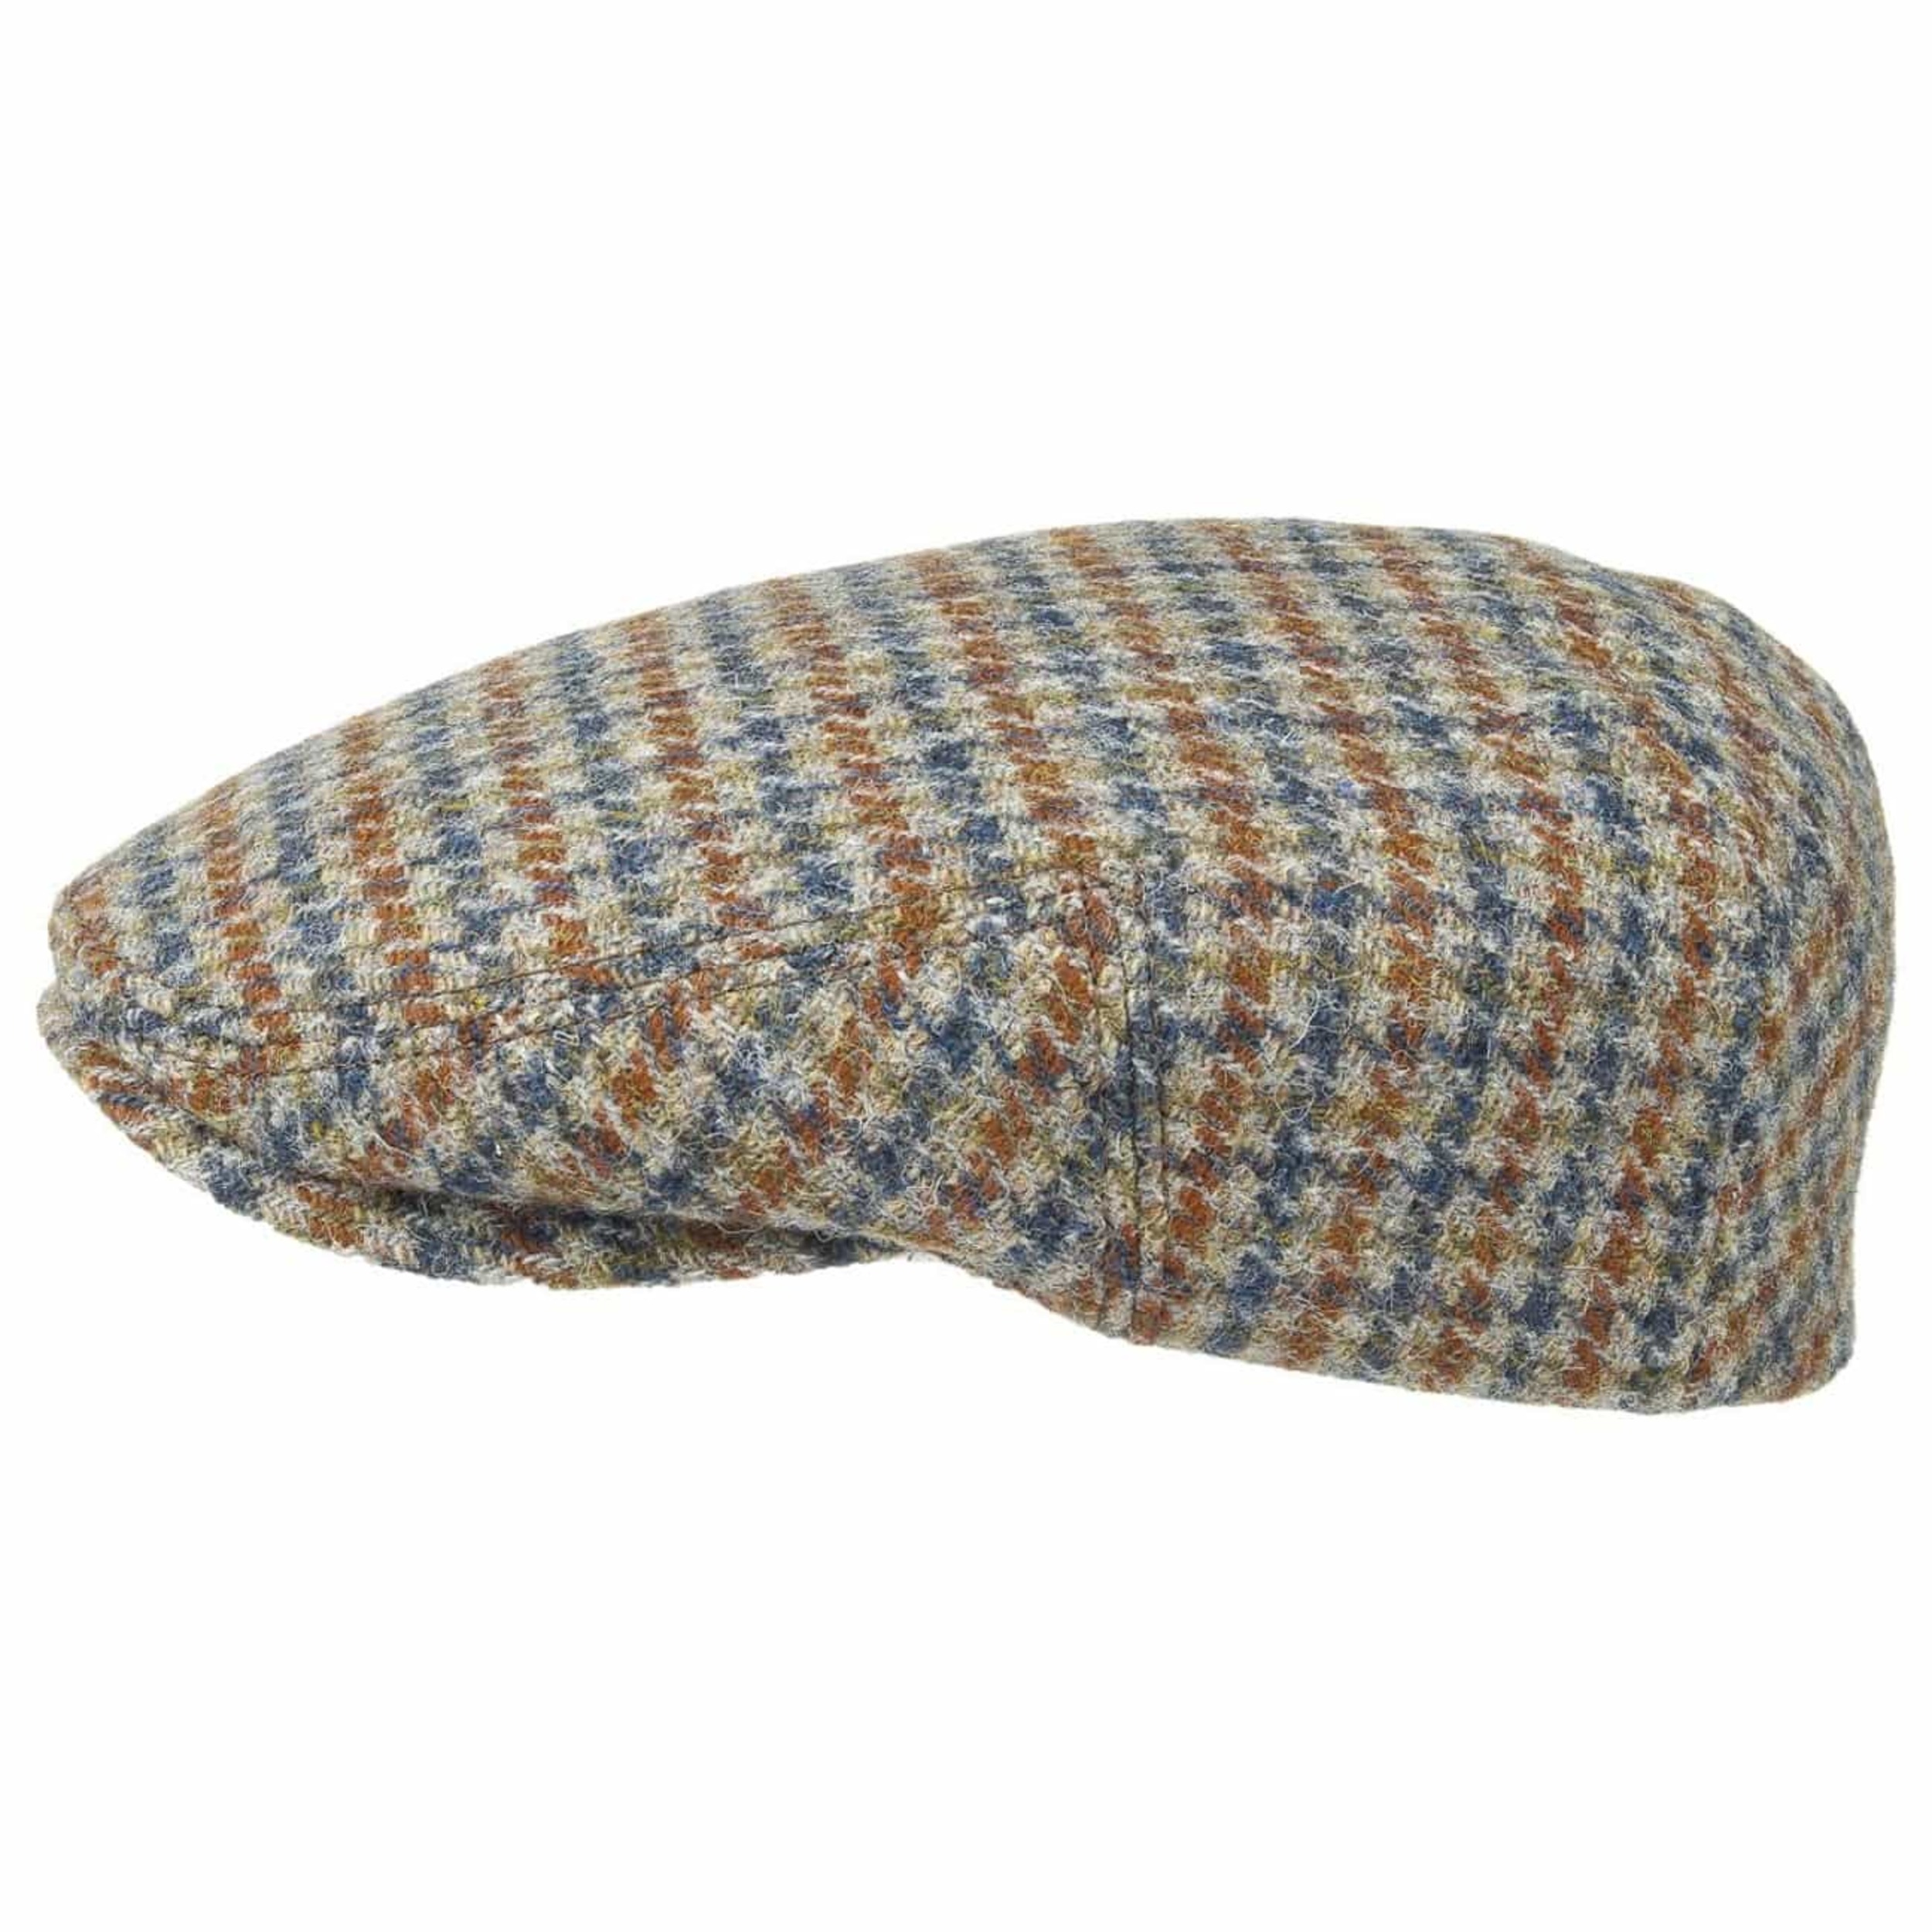 harris tweed flat cap